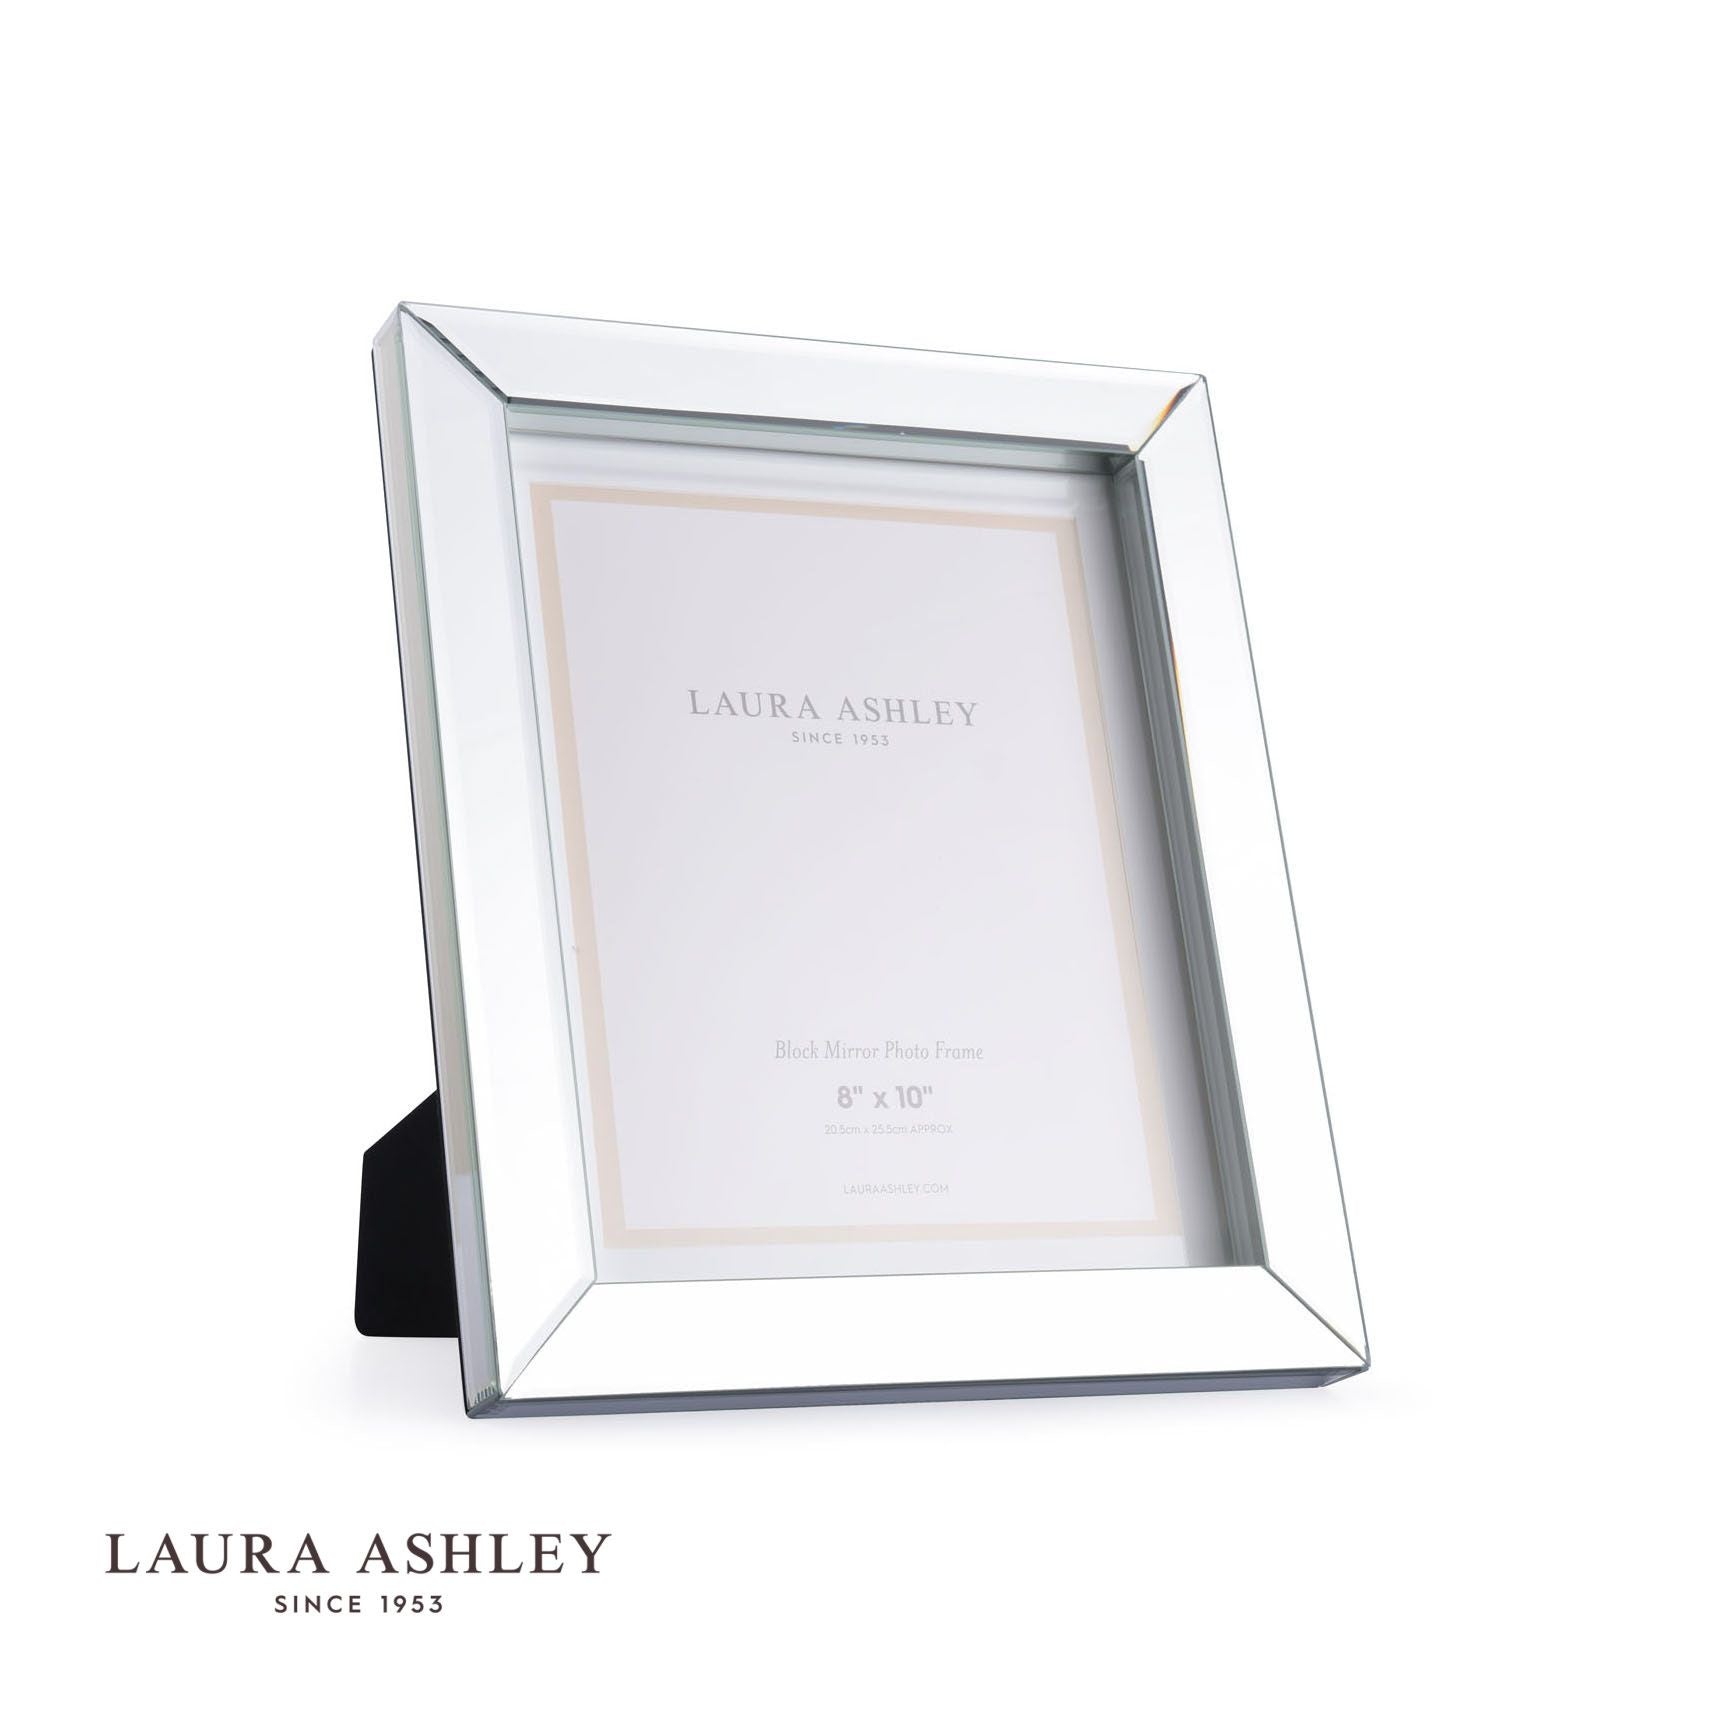 Laura Ashley 8 x 10 Mirror Photo Frame